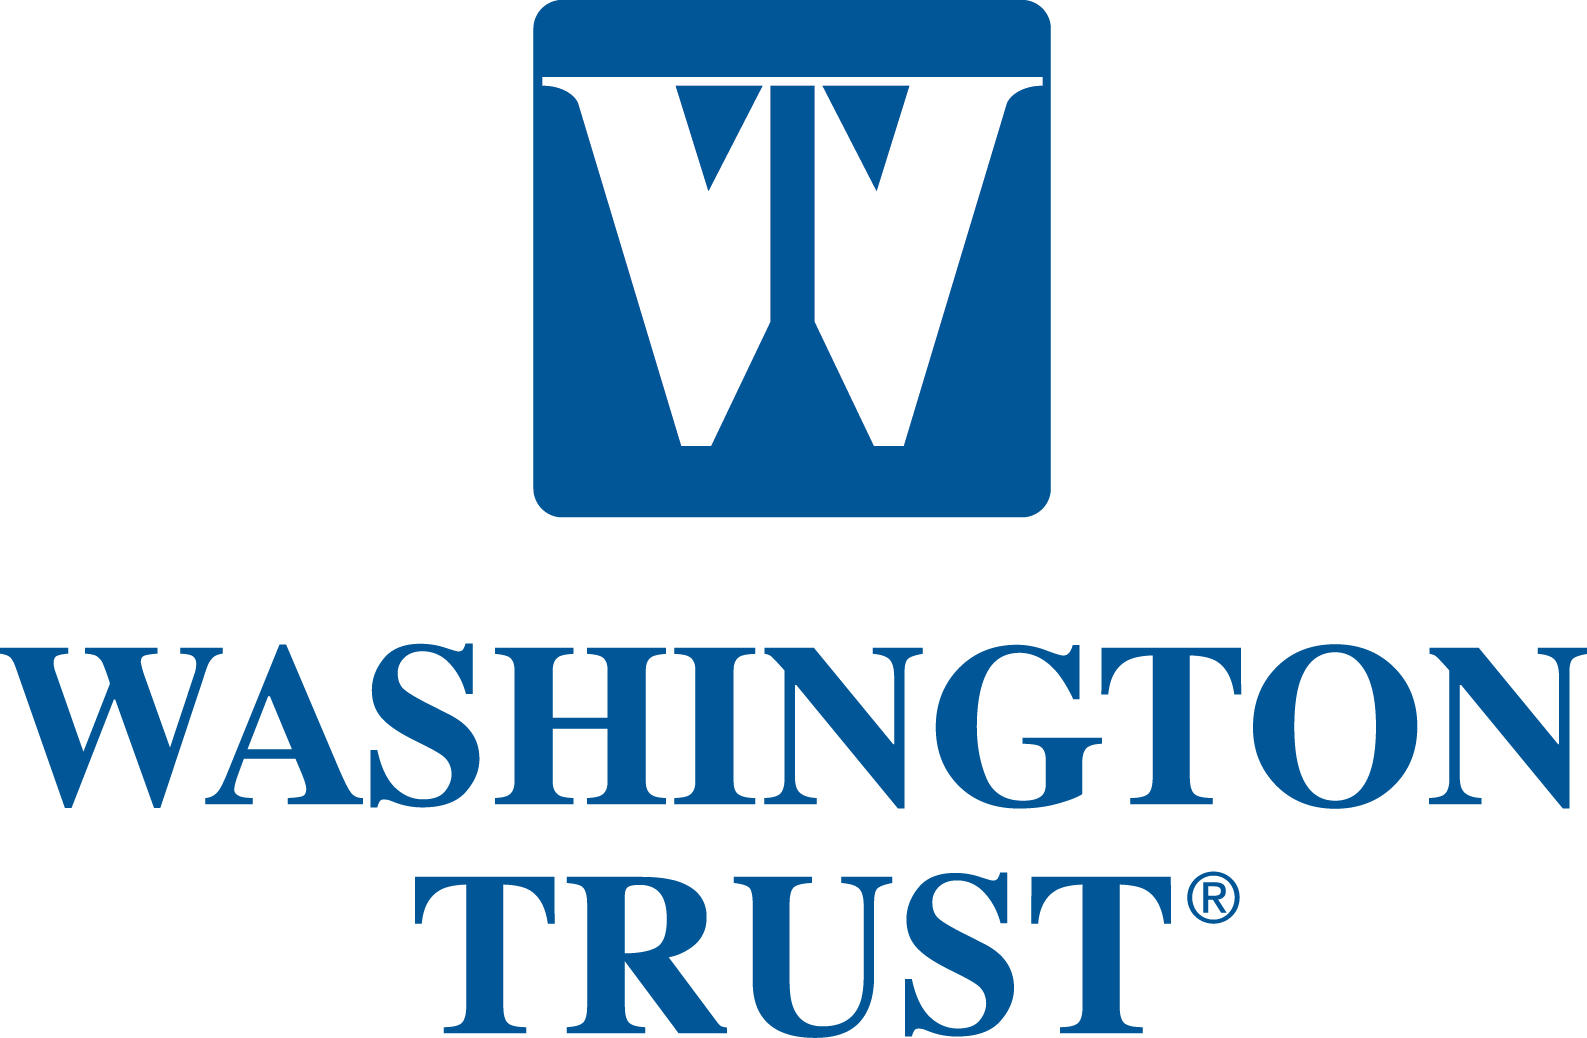 The Washington Trust Compnay